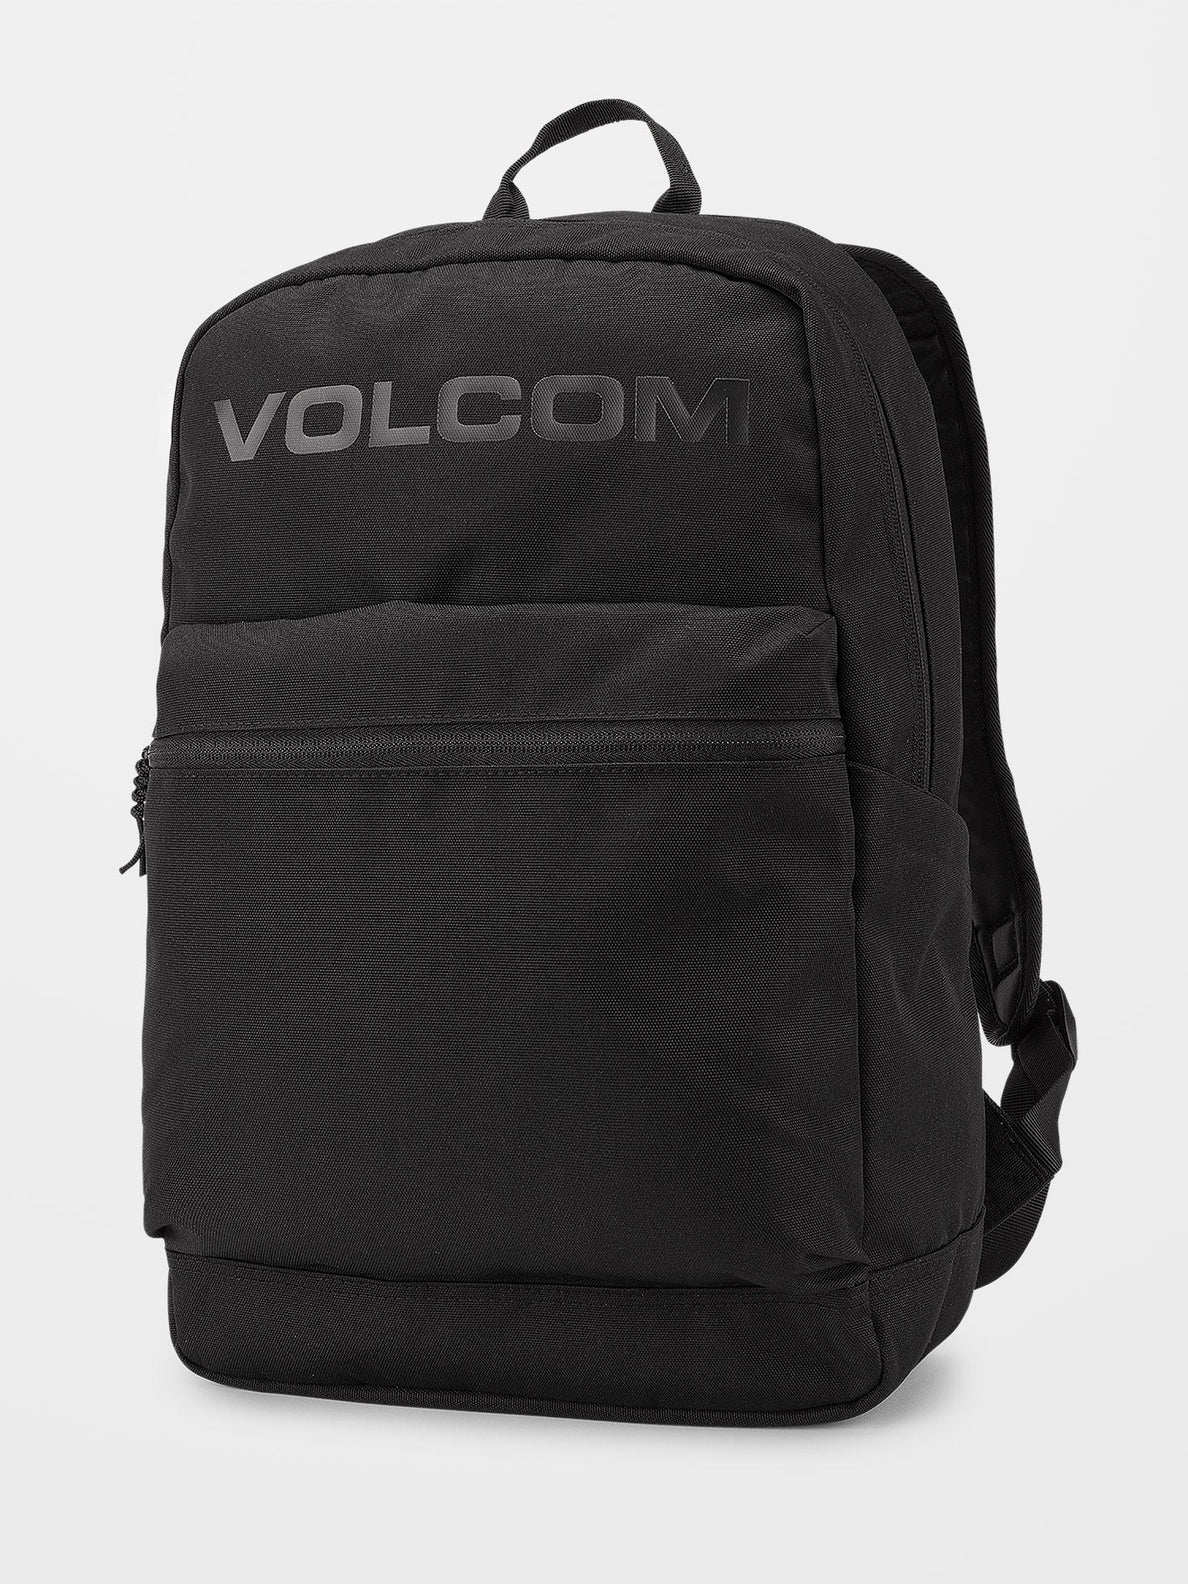 Volcom School Backpack - BLACK ON BLACK (D6522205_BKB) [F]